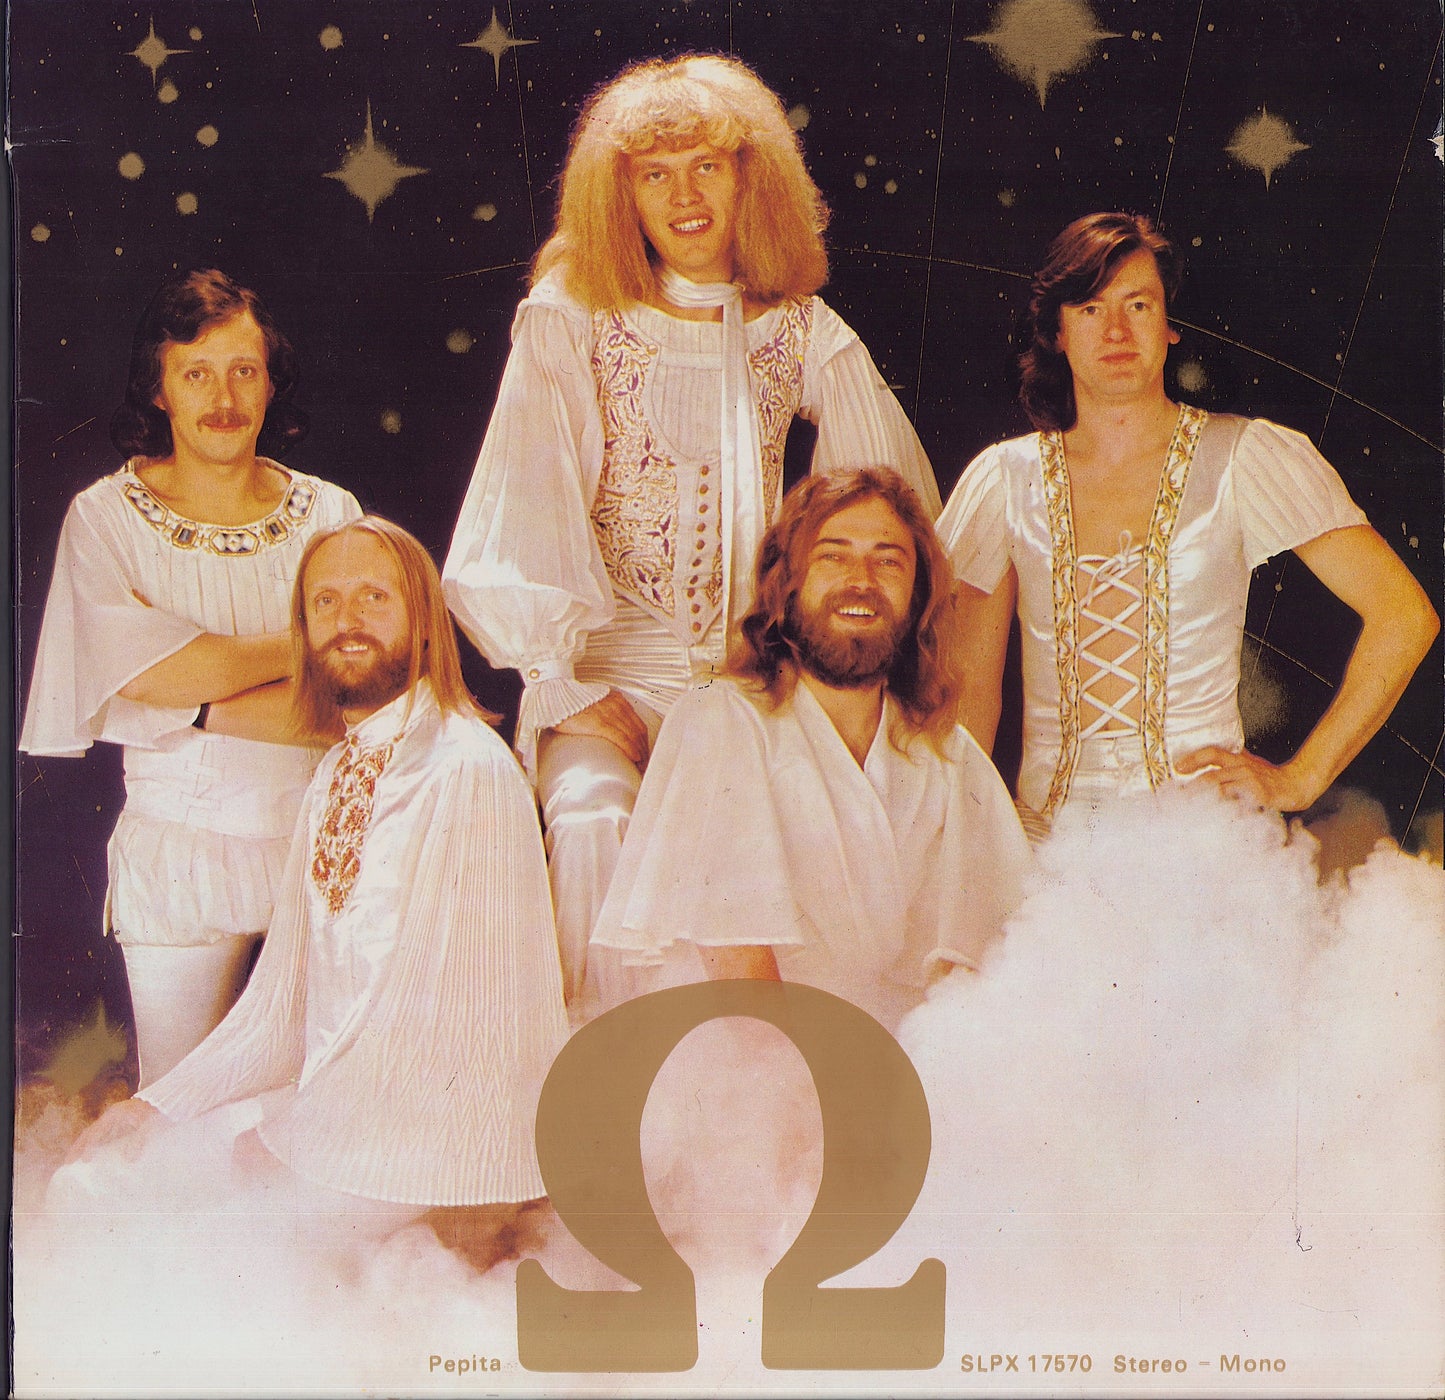 Omega - Csillagok Útján / Omega 8 = Skyrover = Звездным Путем Vinyl 12"